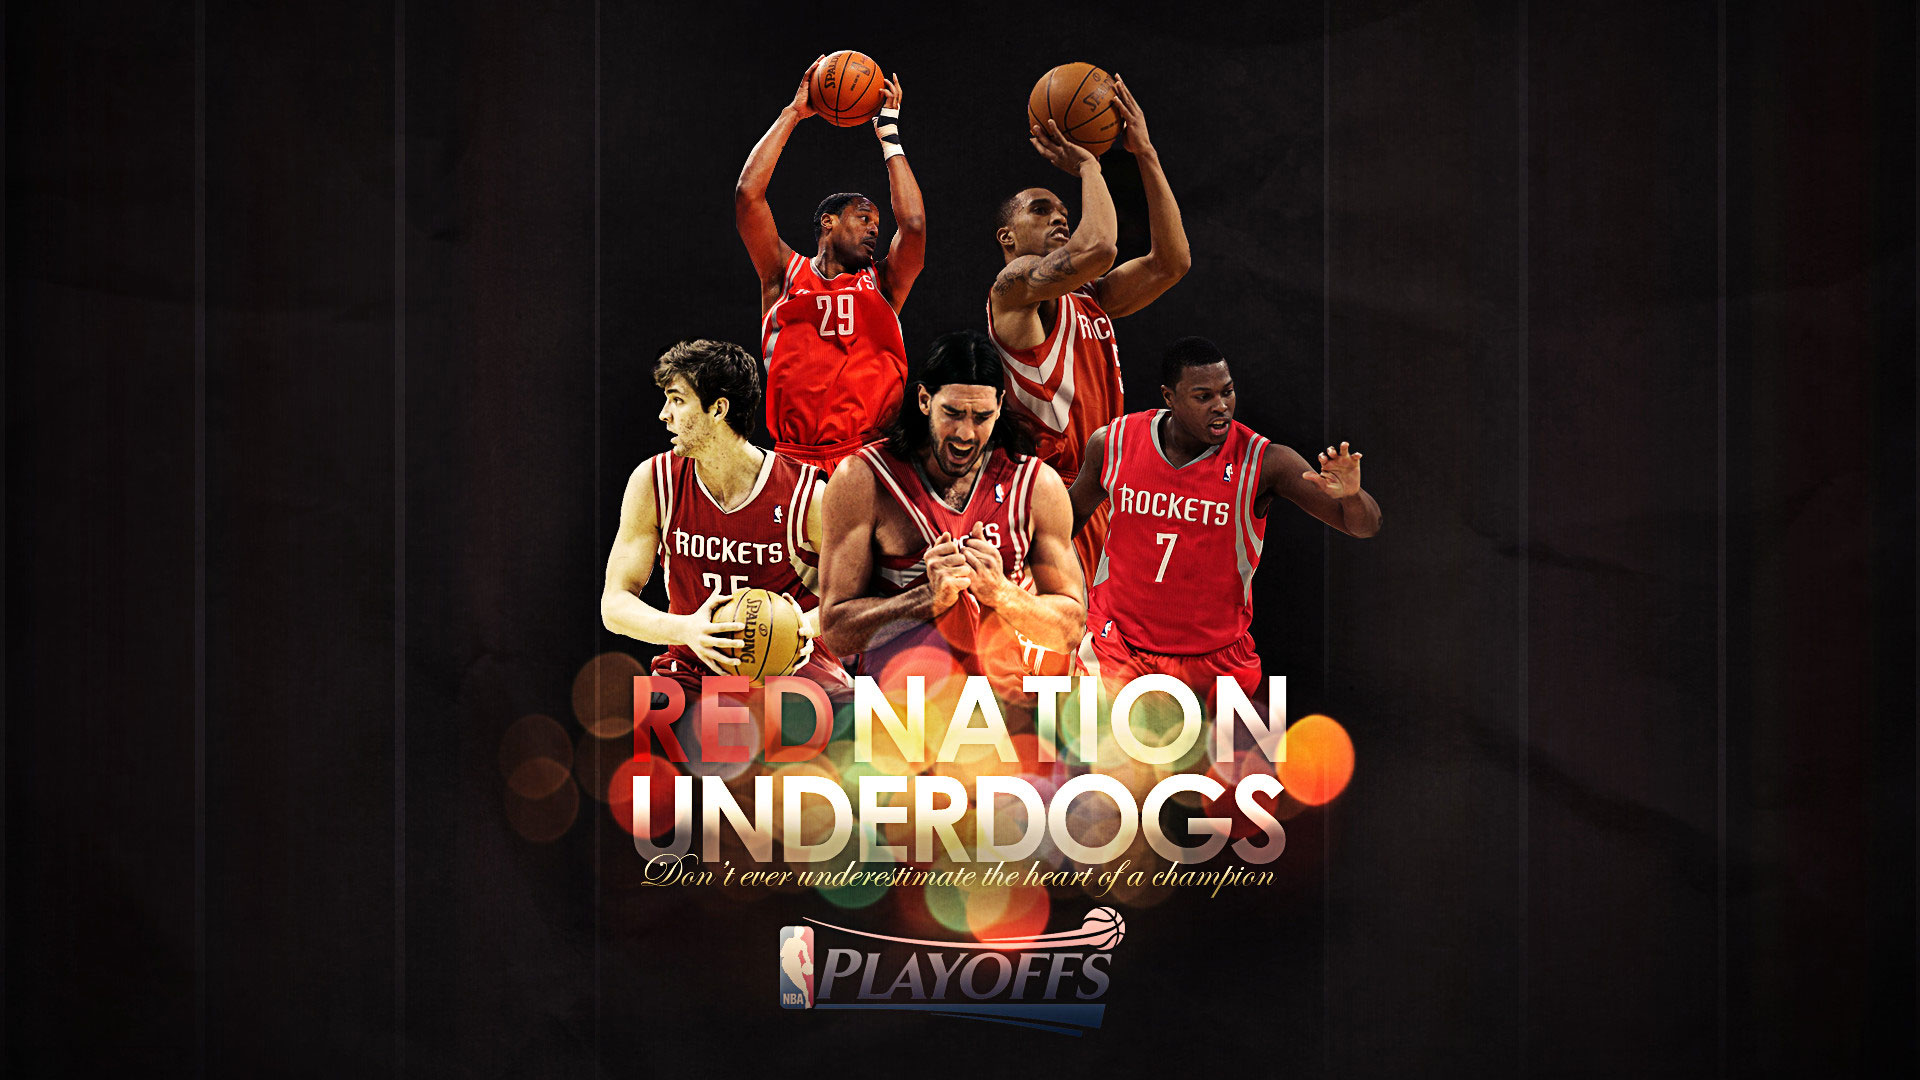 Rockets 2012 Playoffs 1920×1080 Wallpaper | Basketball Wallpapers at BasketWallpapers.com1920 x 1080